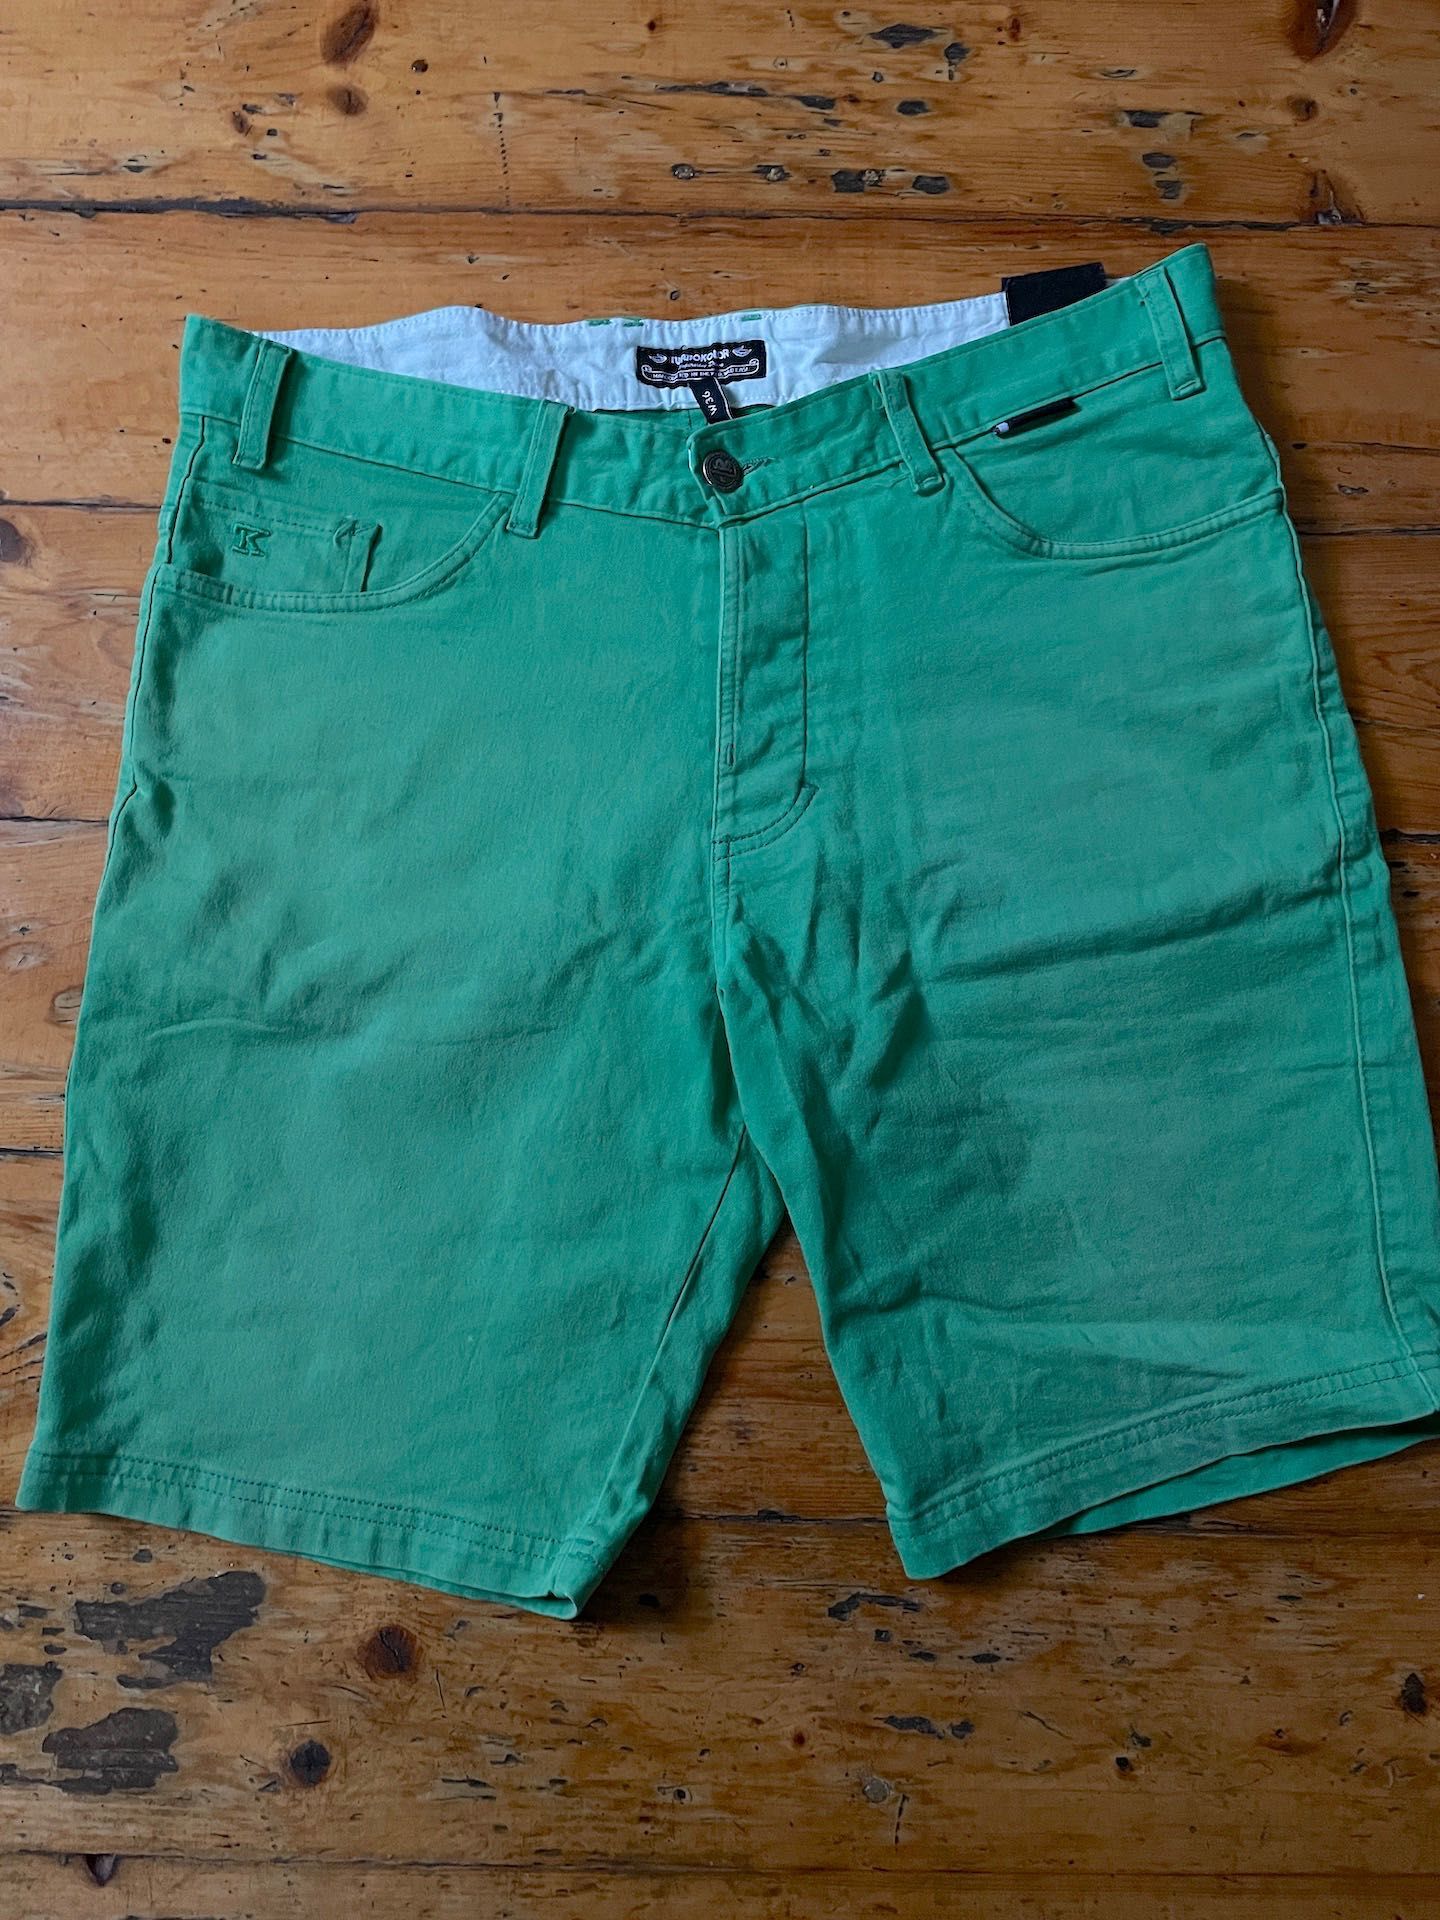 Spodnie krótkie shorty Turbokolor zielone W36 streetwear rap hip hop